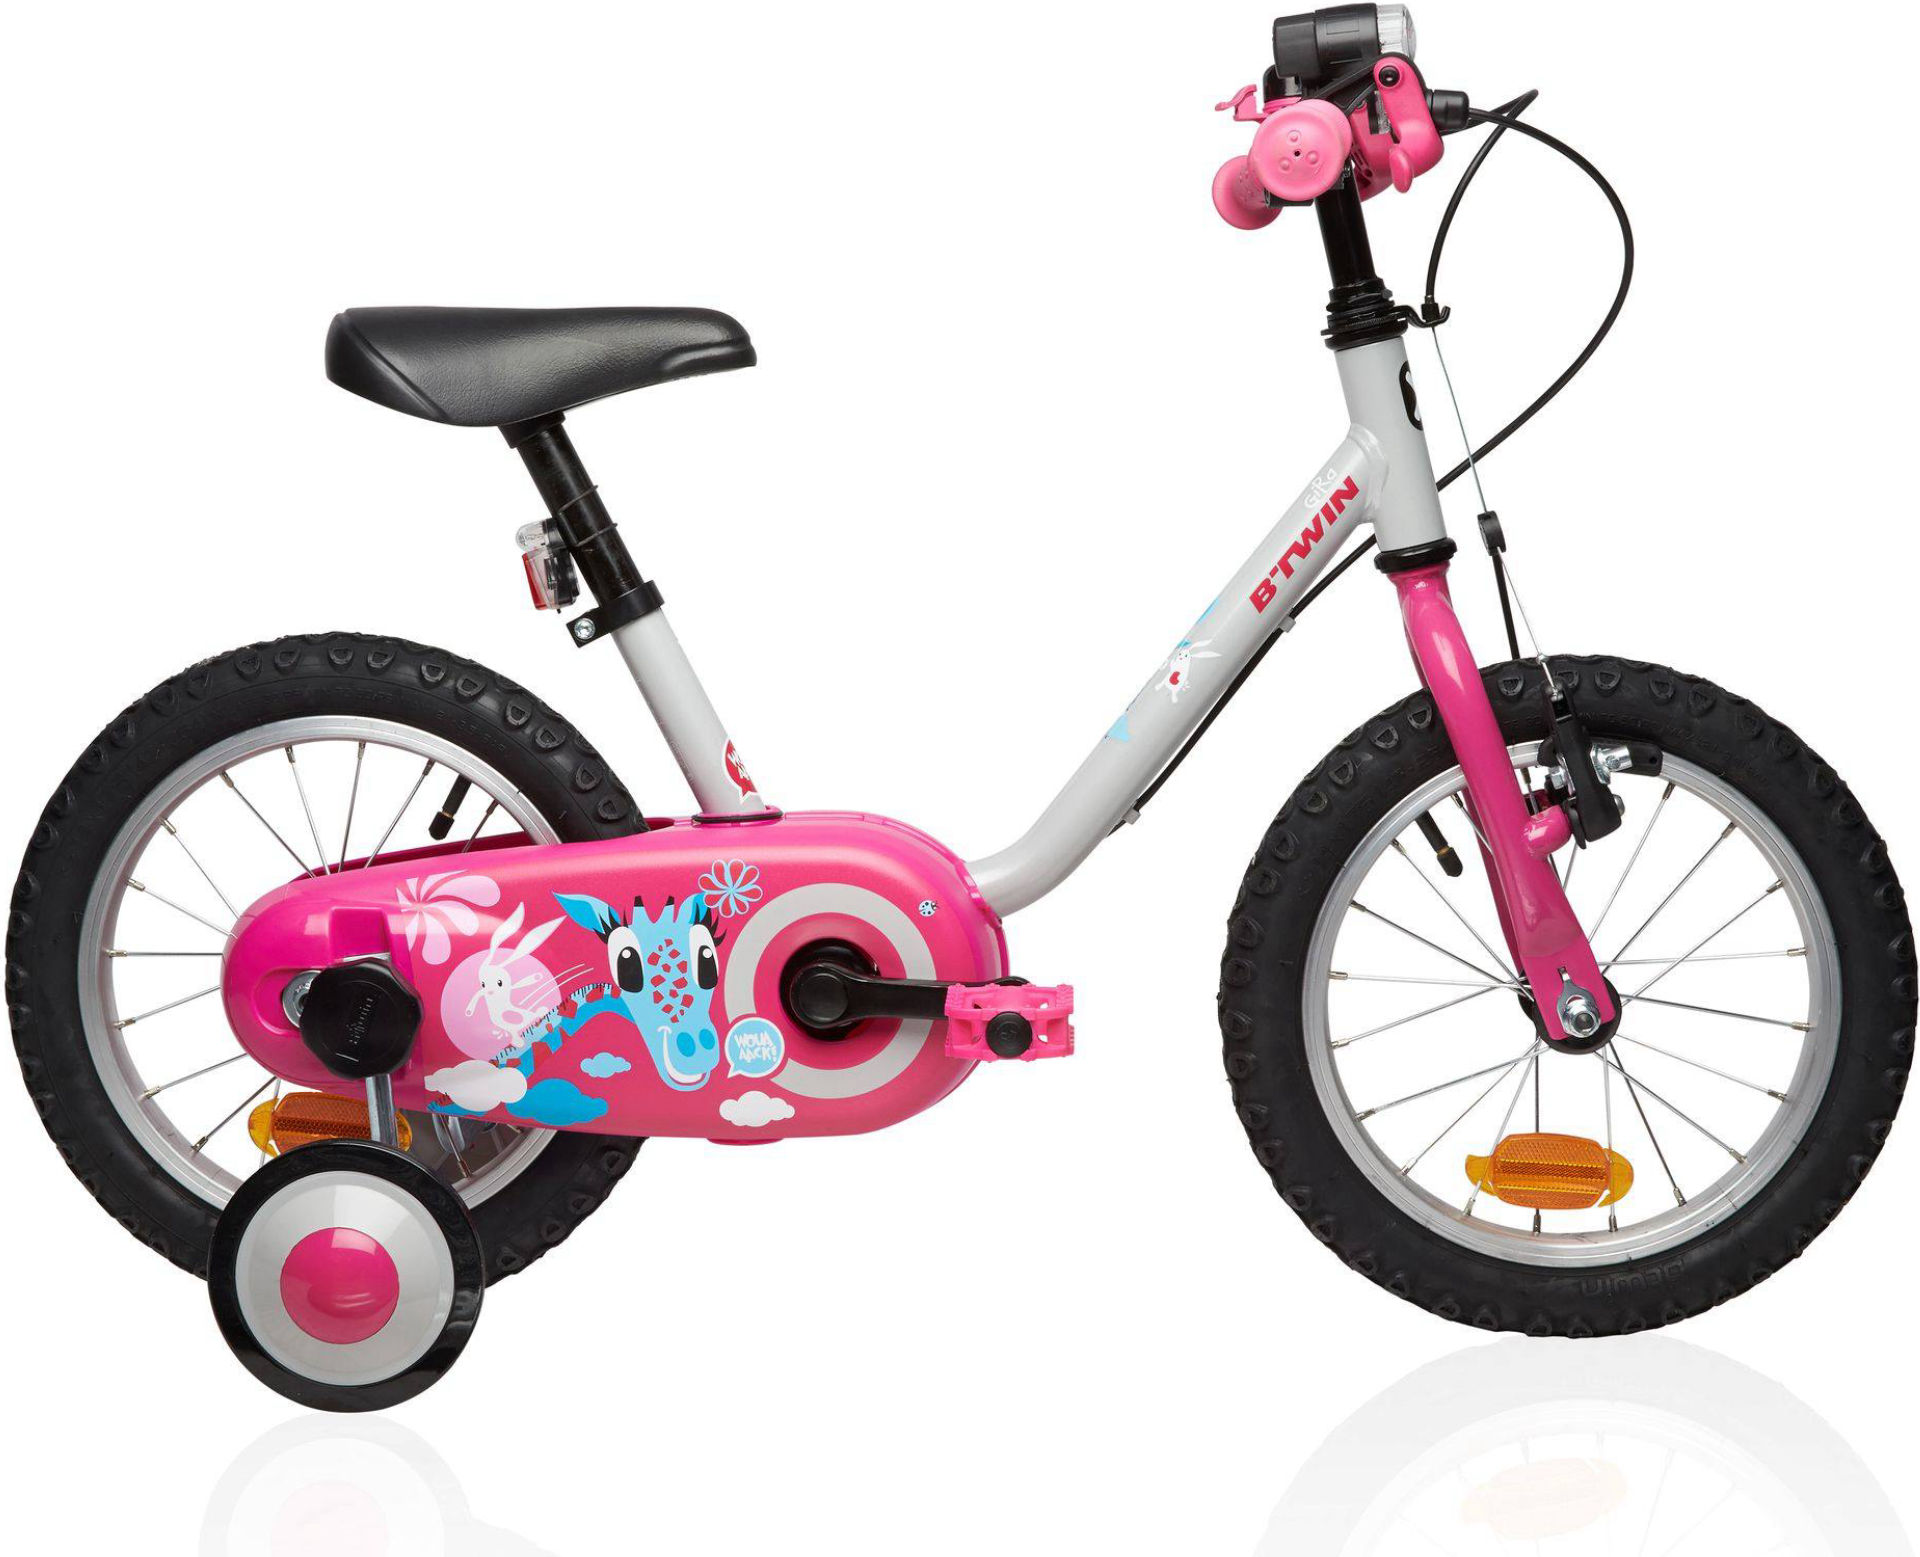 Велосипед 14 дюймов на какой возраст. Велосипед Btwin 14. Btwin 16 велосипед детский. Велосипед Btwin 20 розовый. Велосипед Твинс b Twin 16.